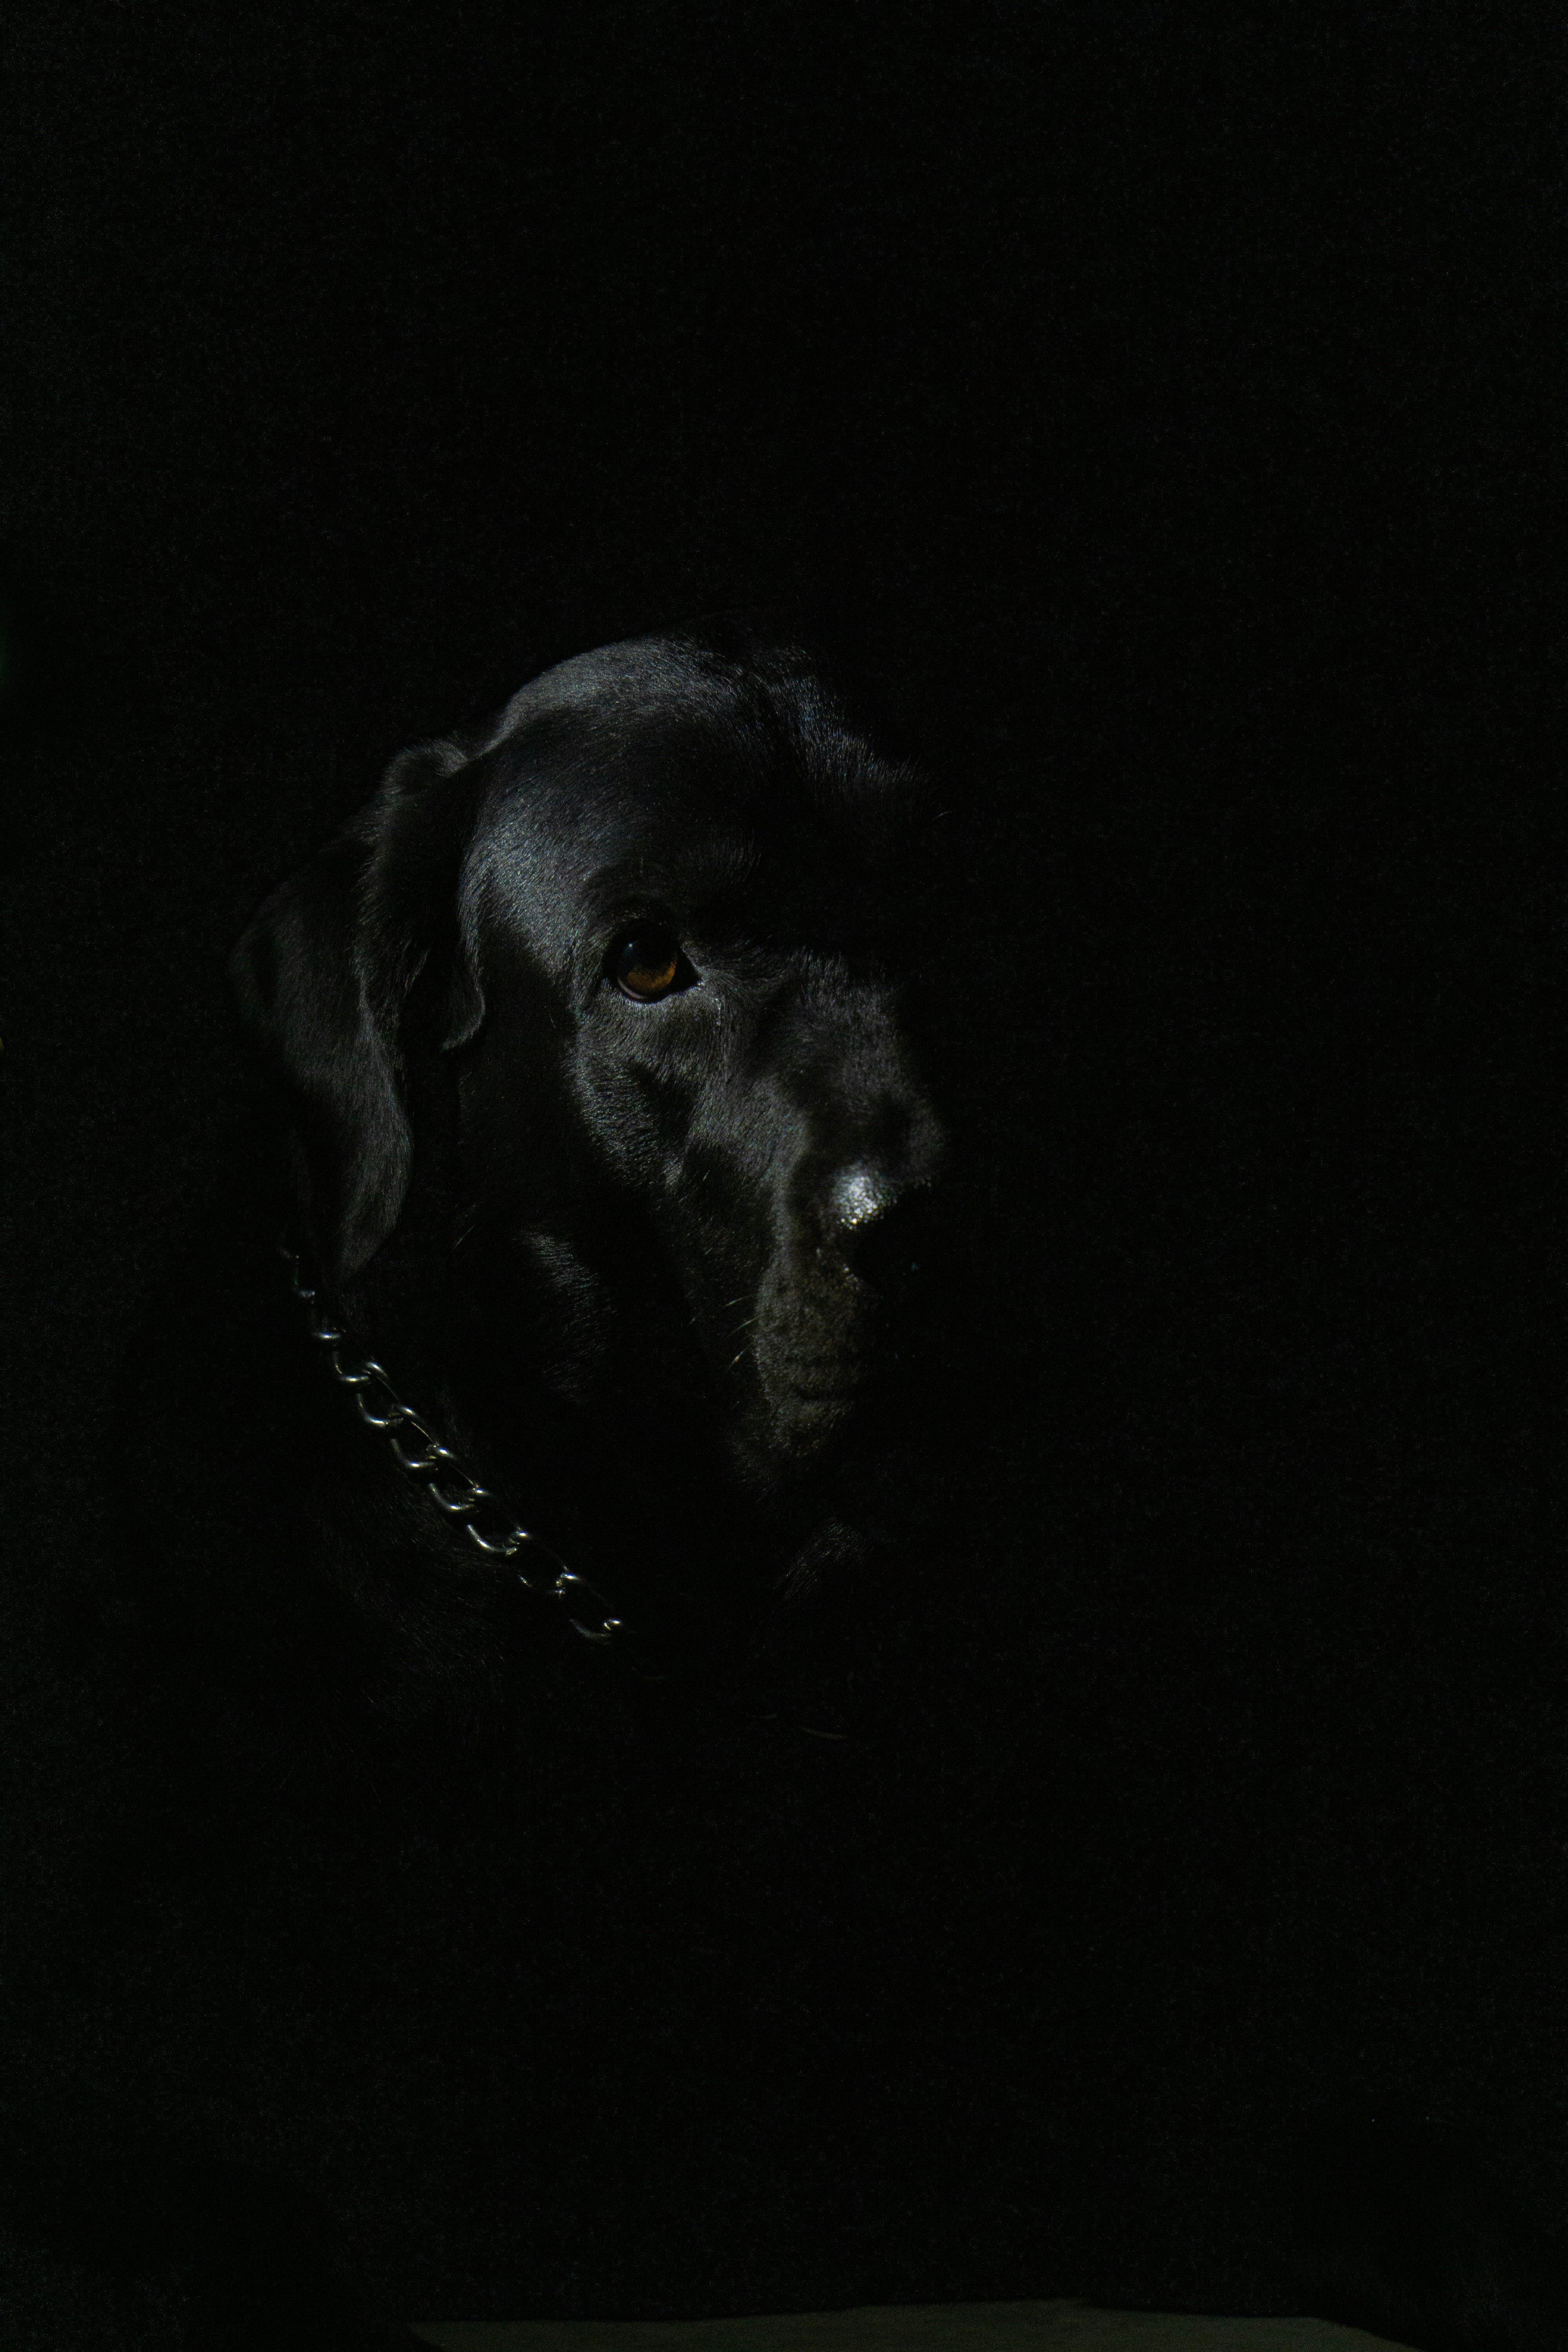 black labrador retriever with black collar